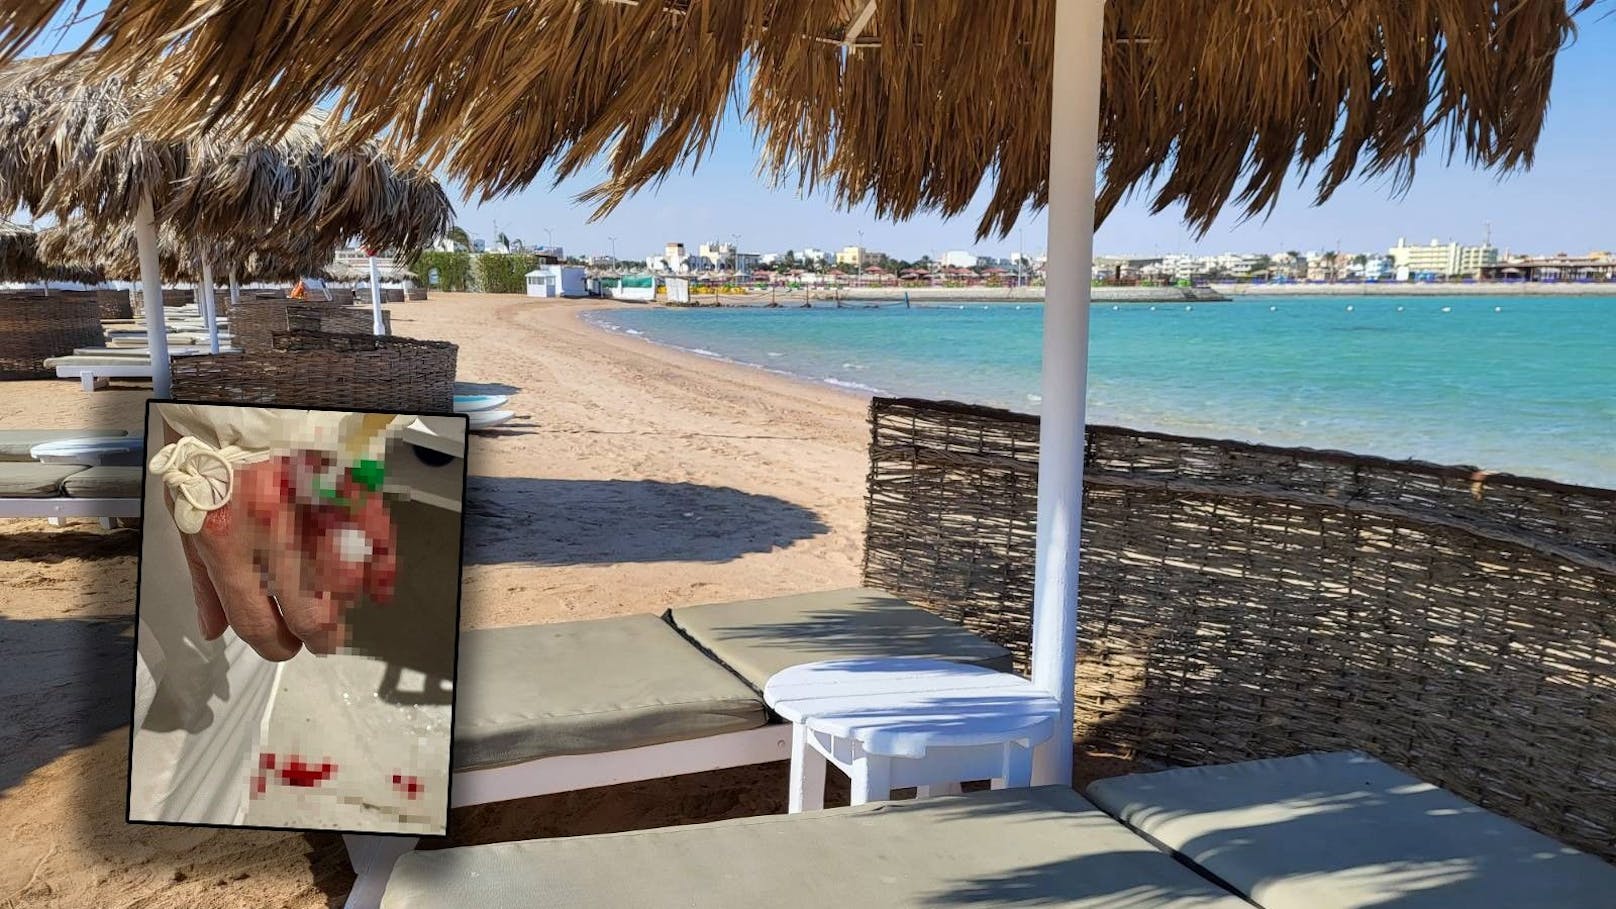 Frau im Hurghada-Urlaub vergiftet: "War am Abkratzen!"